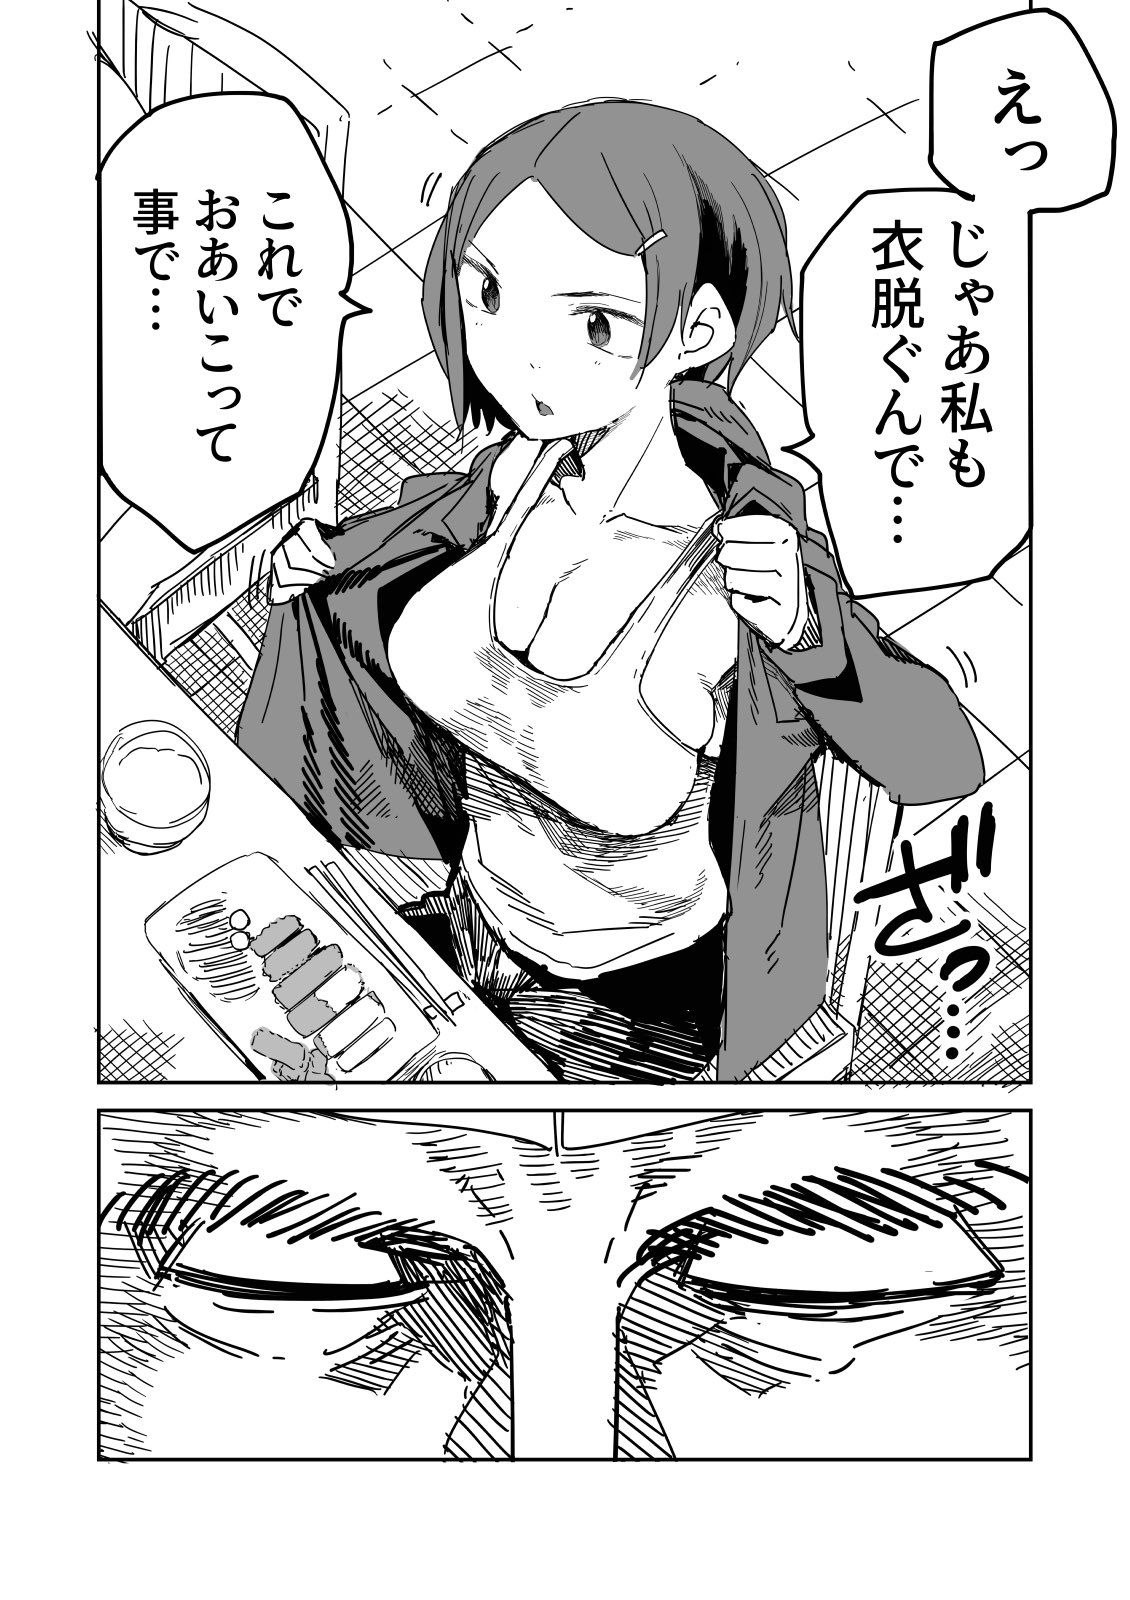 【Image】Gookawa JK, I peeled off my clothes at a tonkatsu shop and got angry, wwww 3